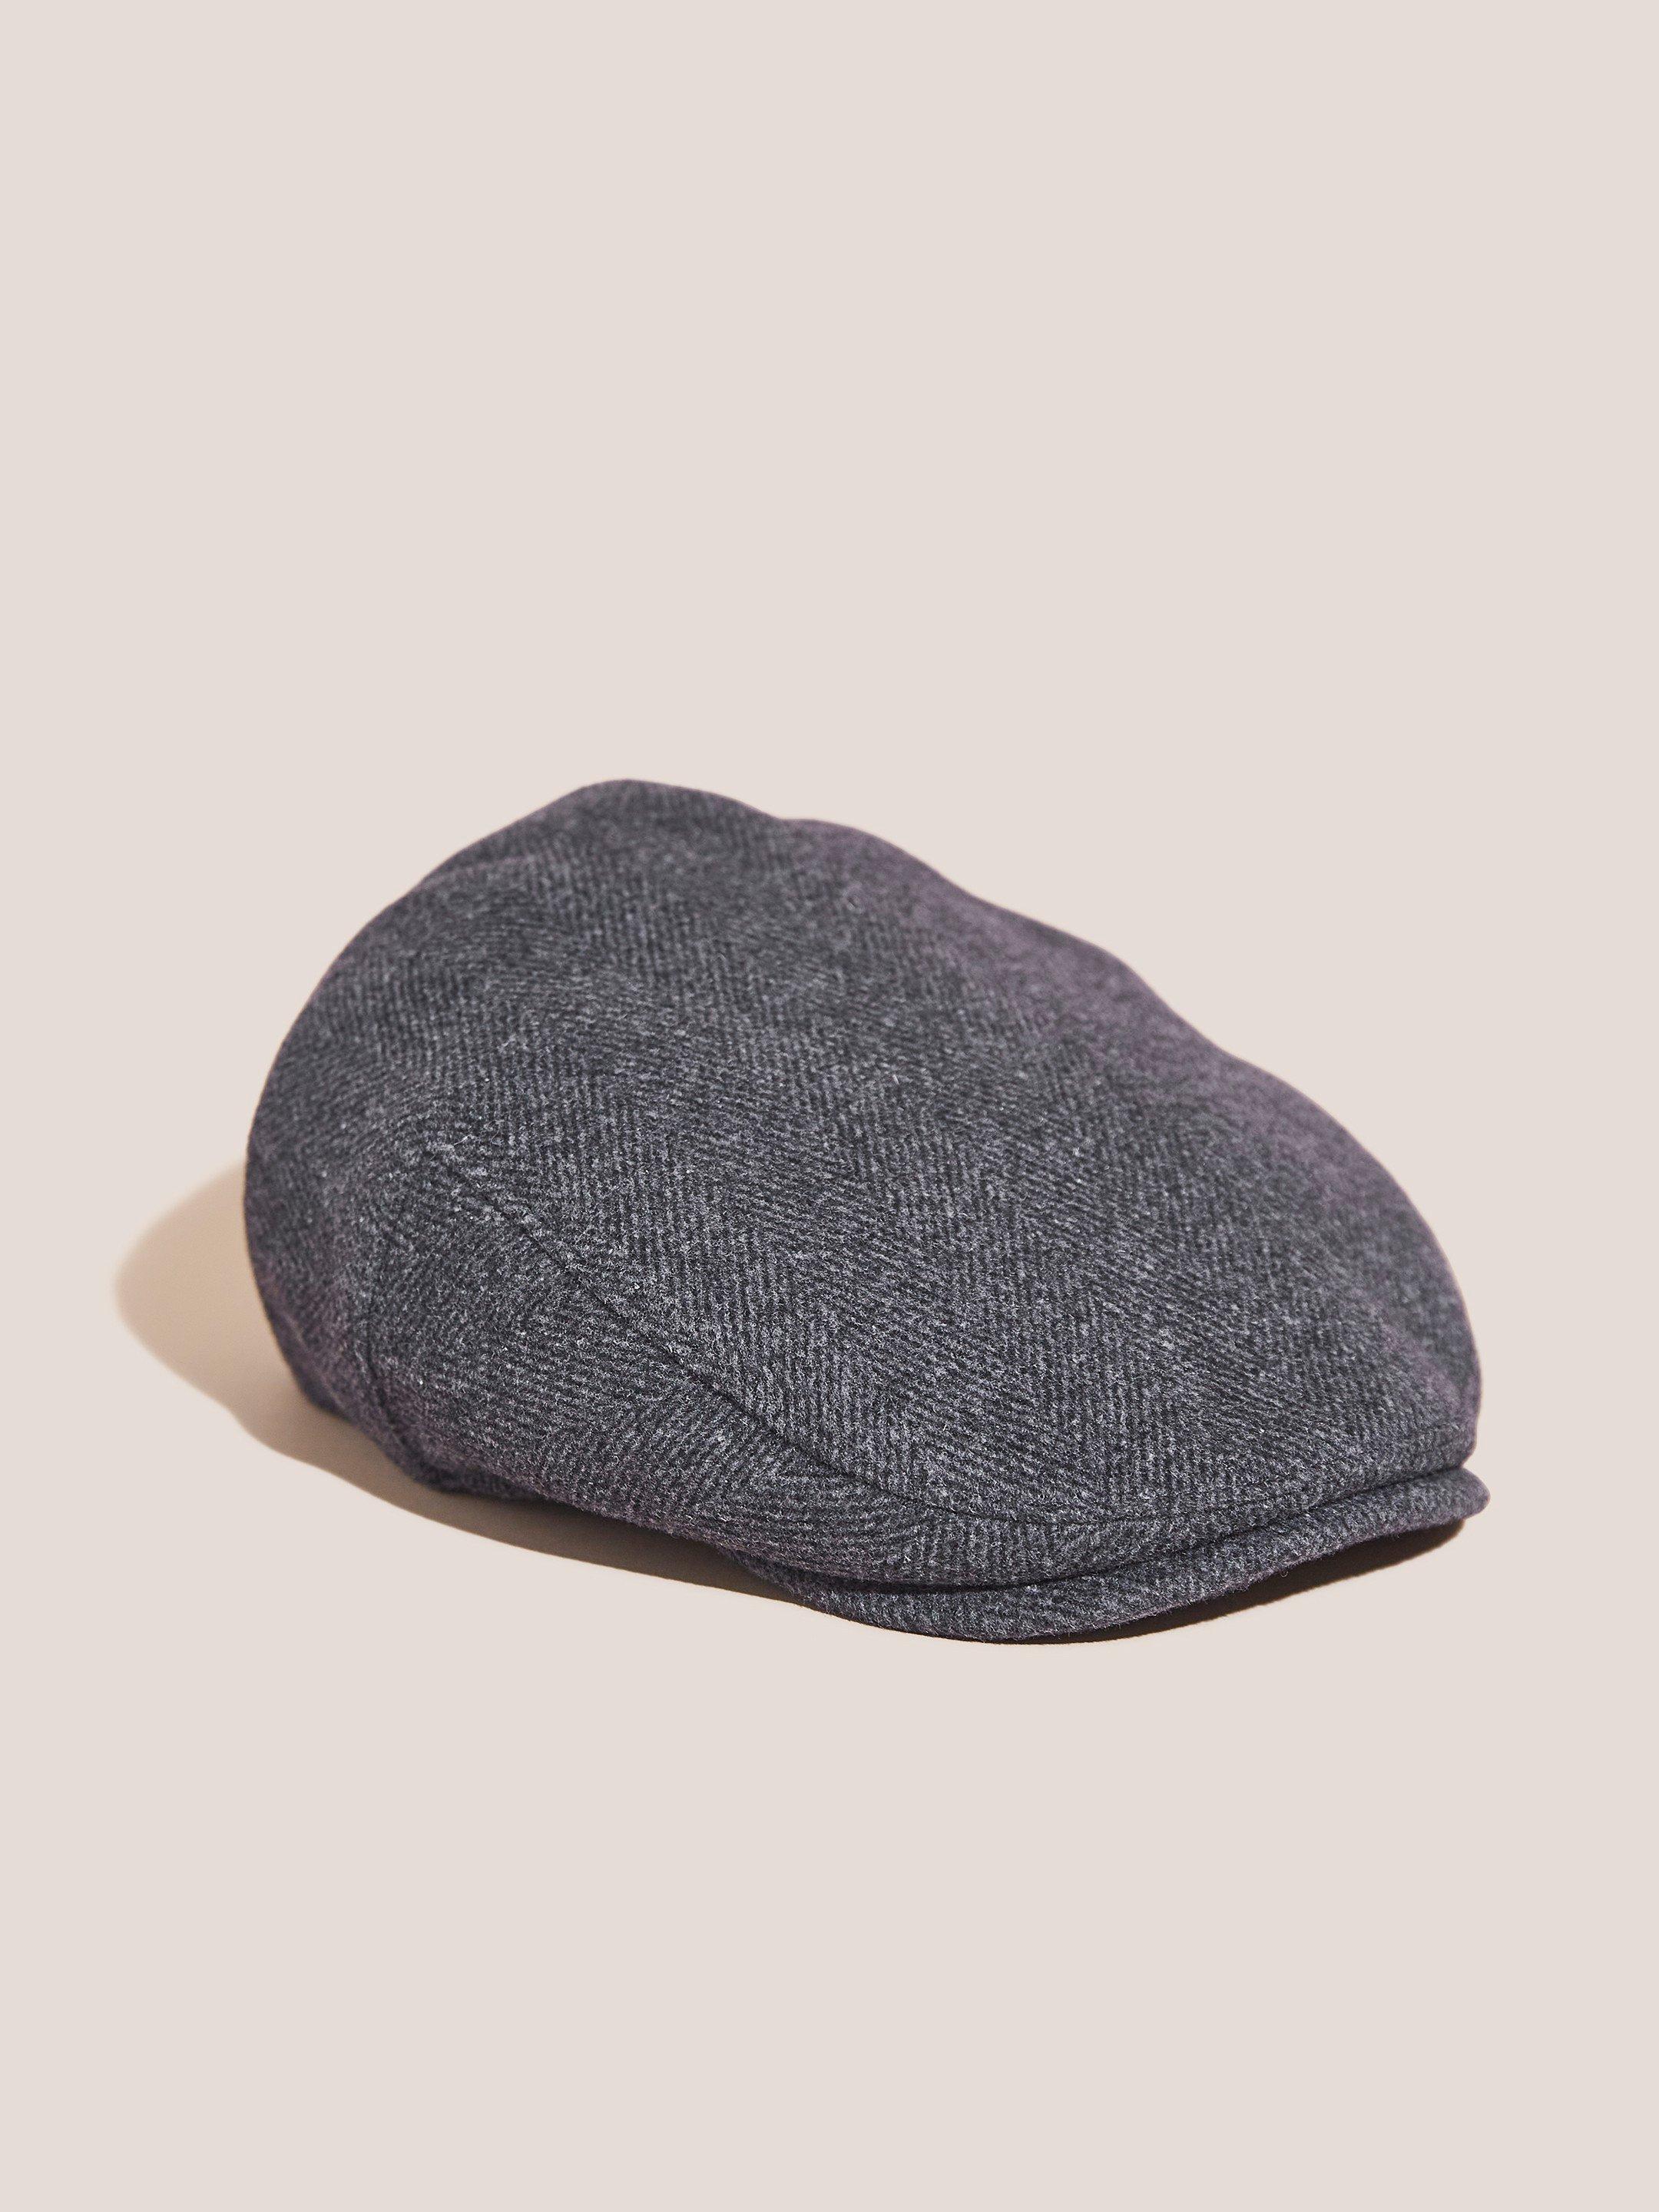 Wool Blend Flat Cap in CHARC GREY - FLAT FRONT